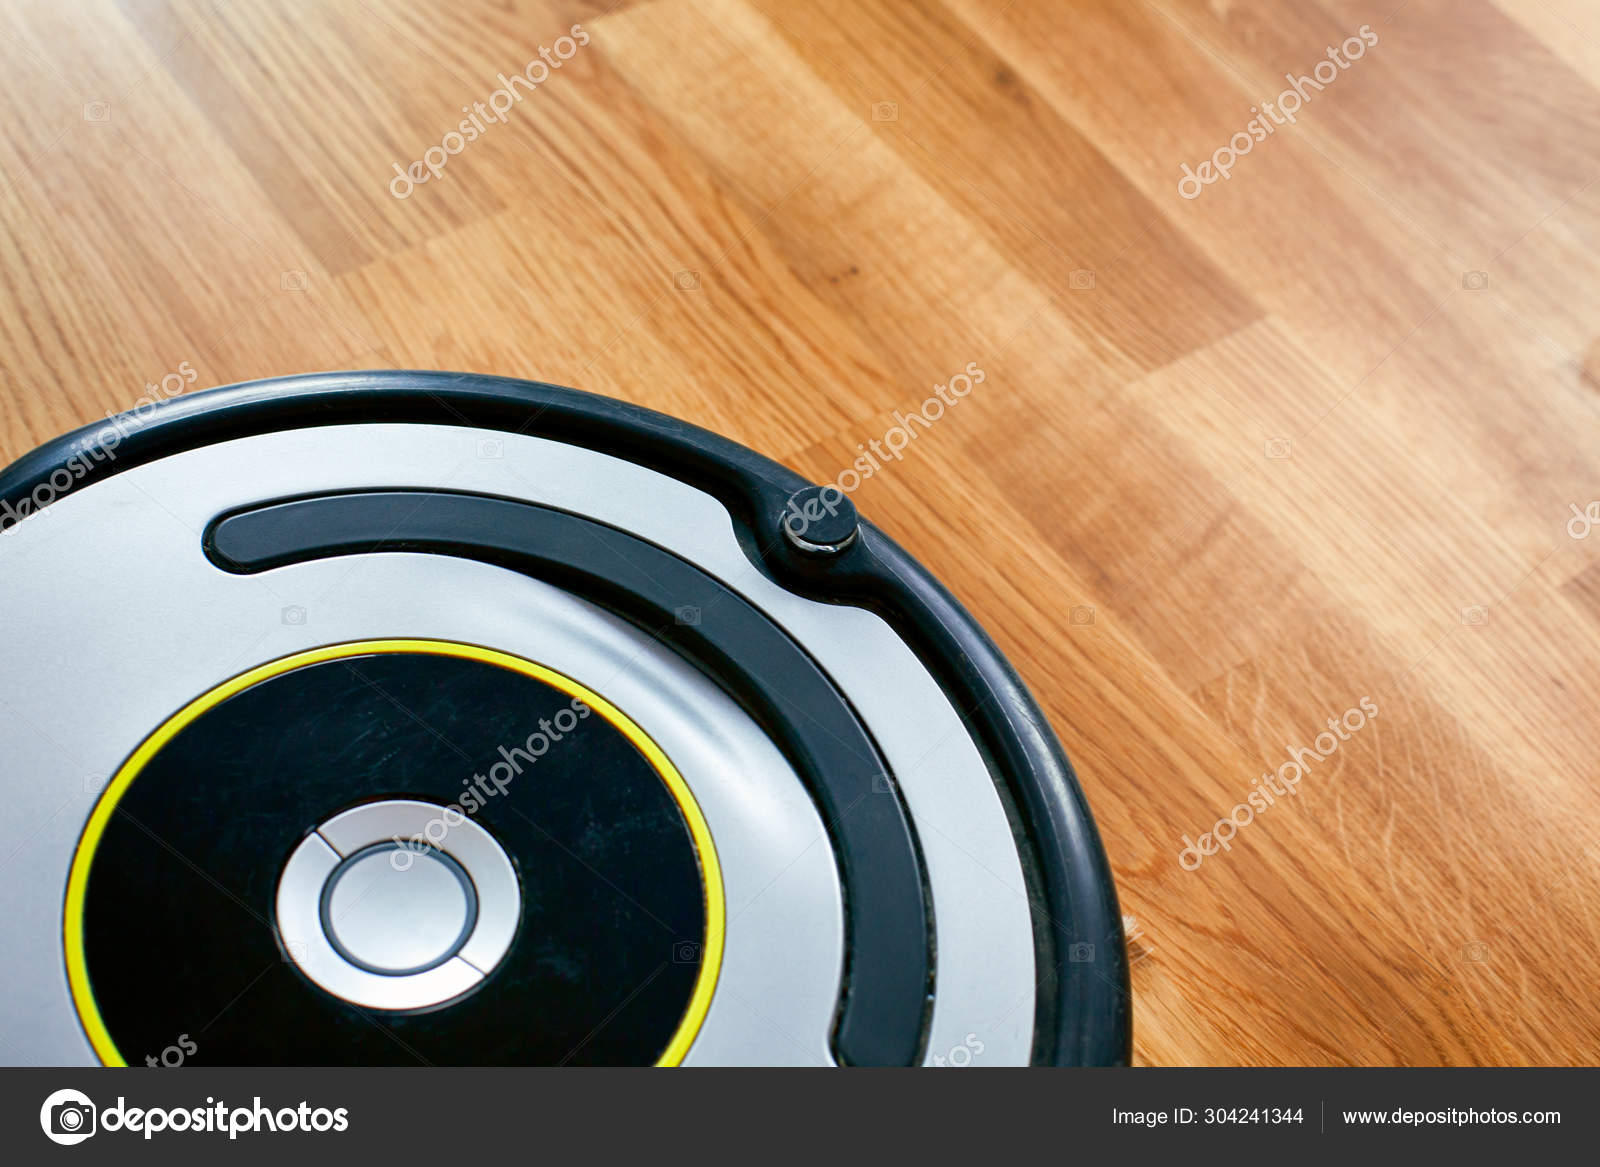 Vacuum Cleaning Robot On Parquet Floor Stock Photo C Rosinka79